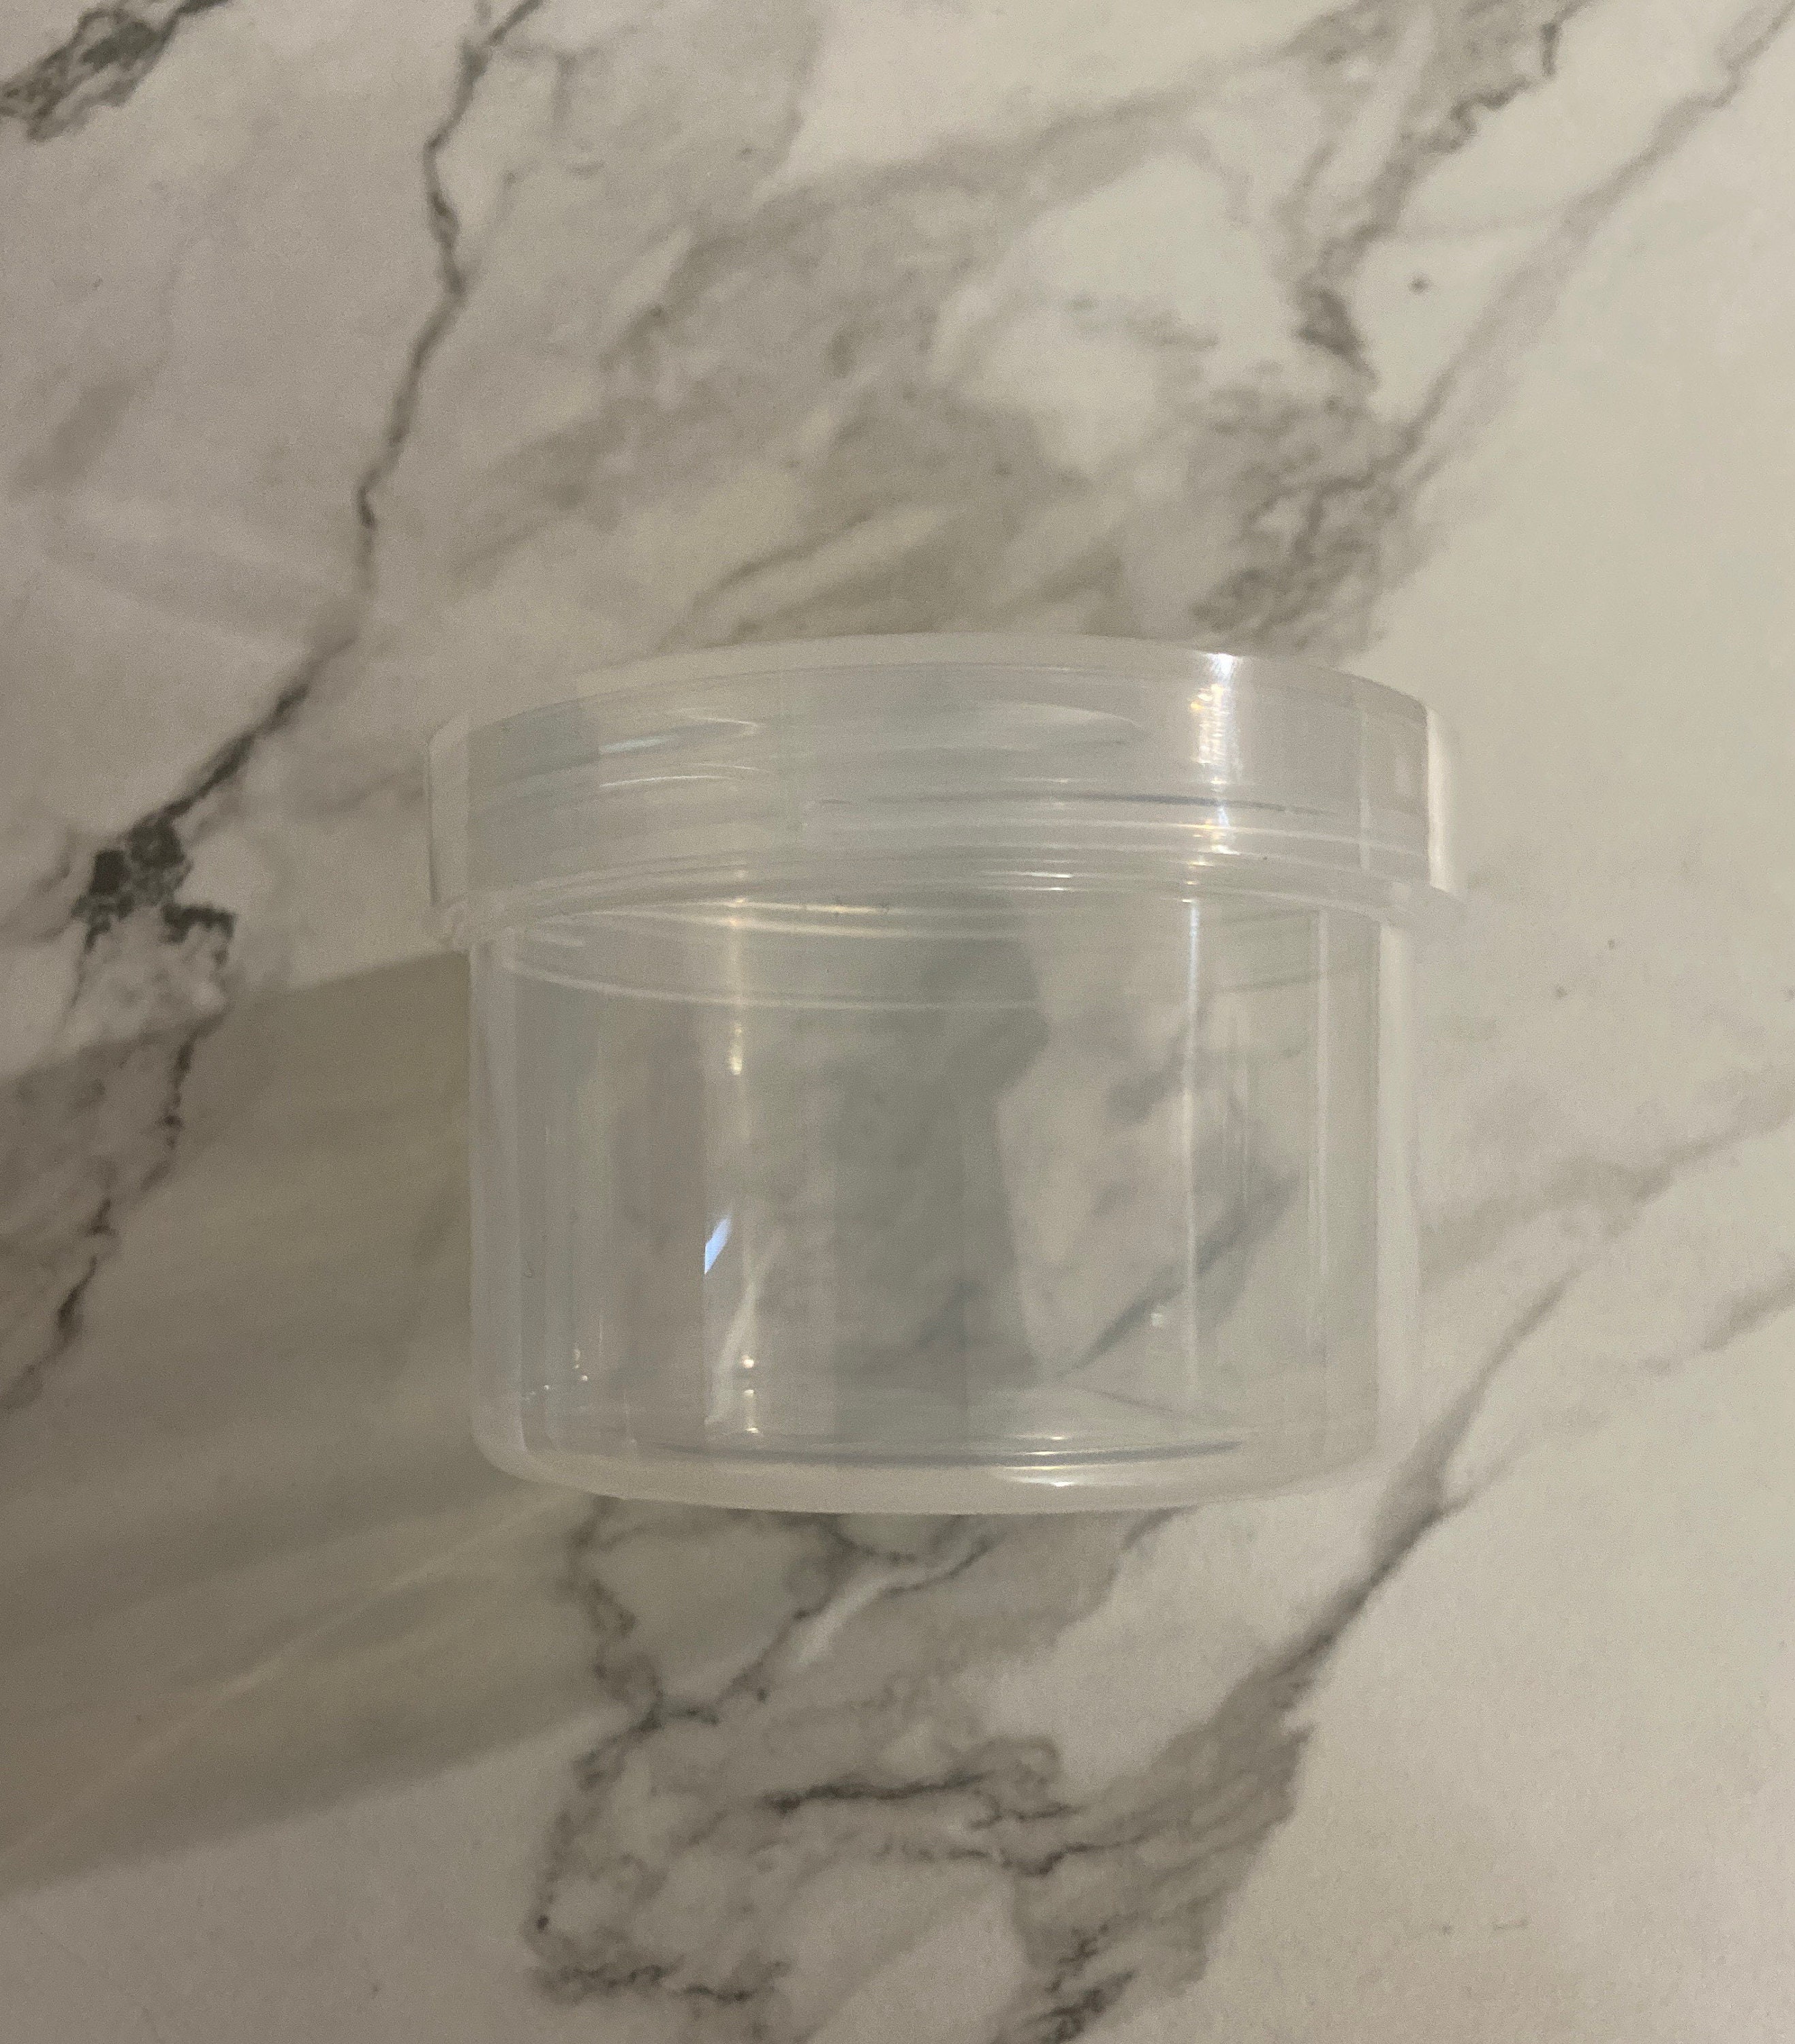 6 X 3ml Empty Mini Plastic Jars / Pots / Boxes, Airtight Storage